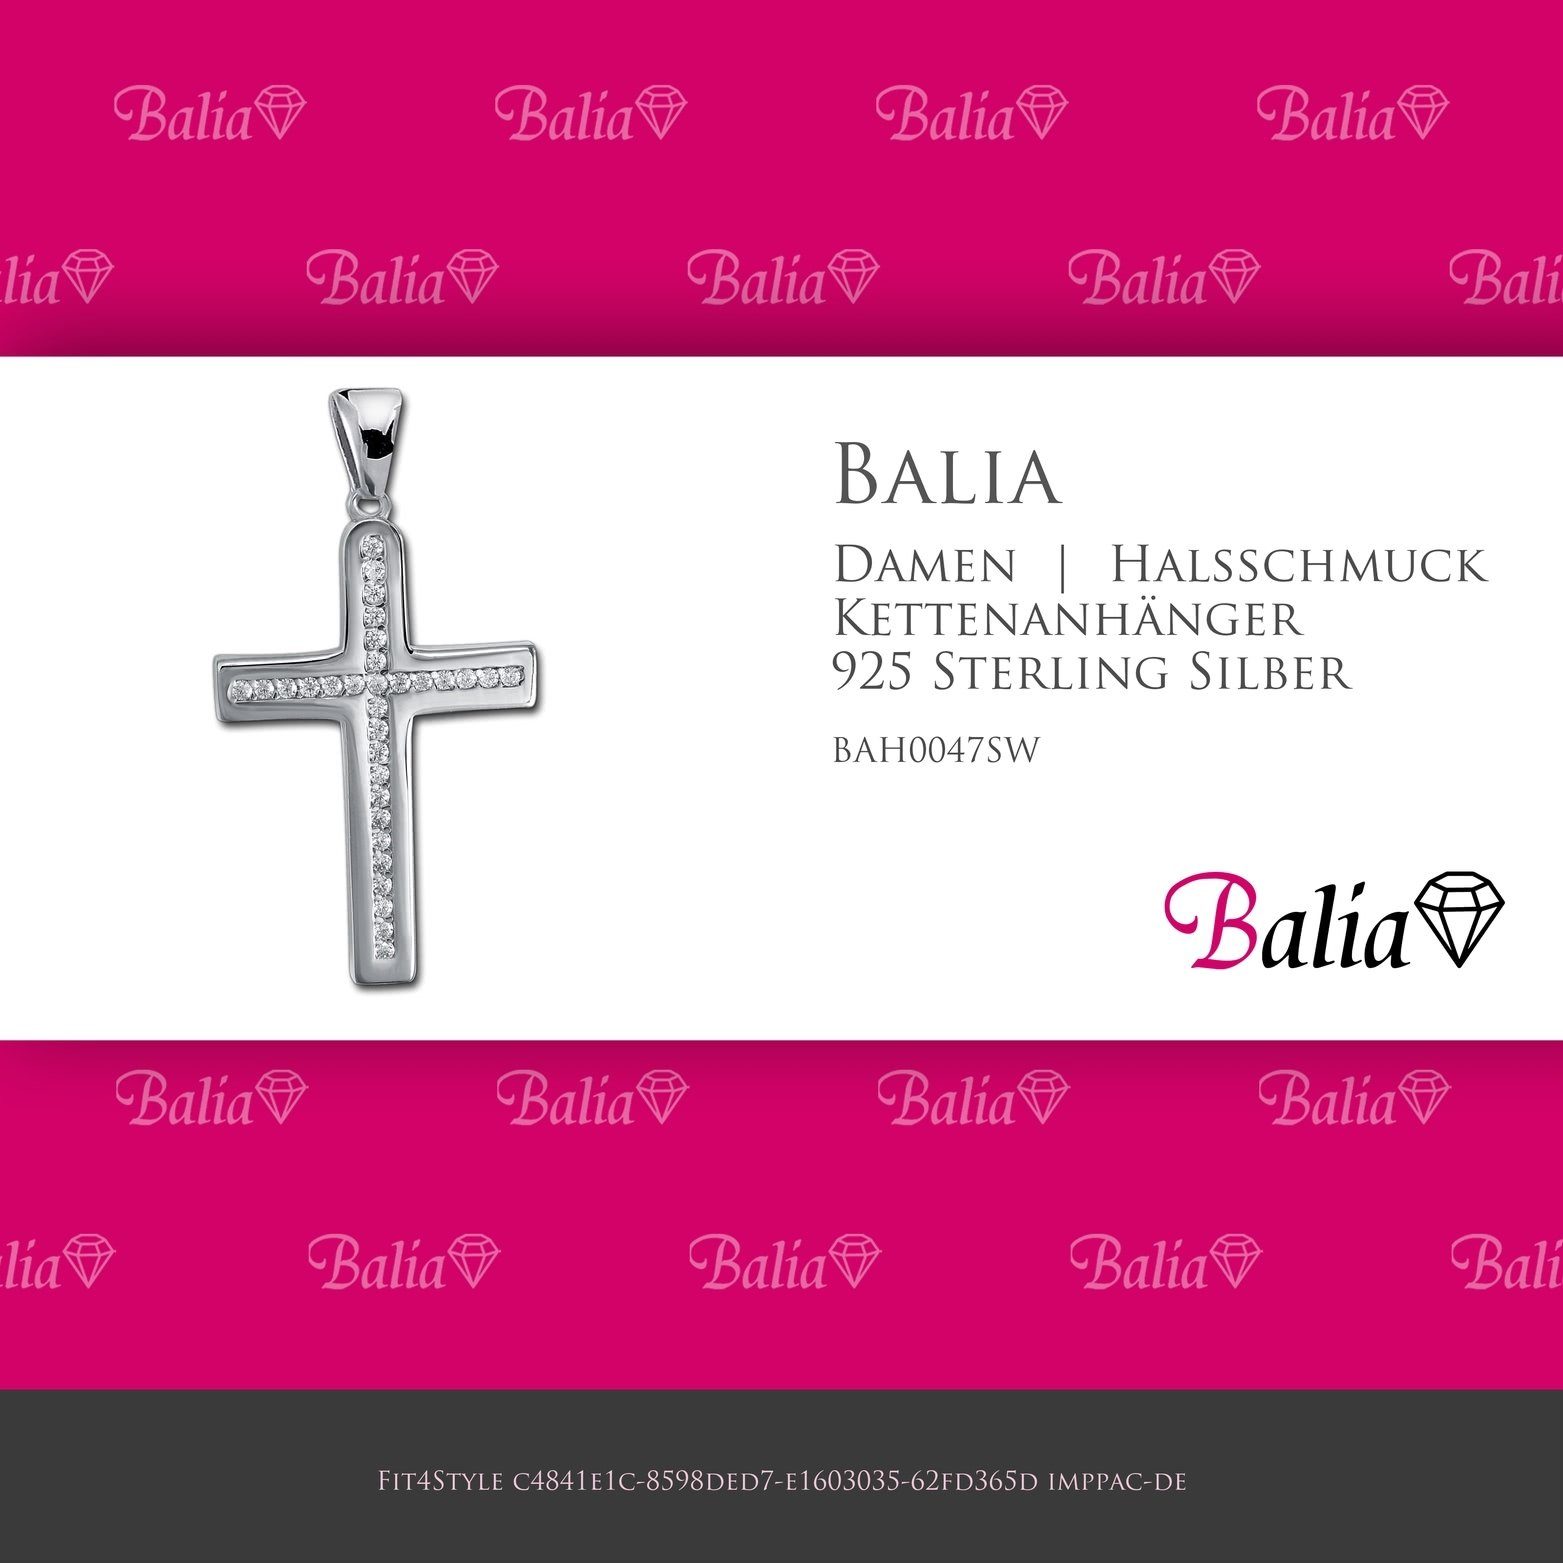 Kettenanhänger Balia 925 für Sterling ca. Balia Damen 925, 3,3cm, Silber (Kreuz) Kettenanhänger Kettenanhänger